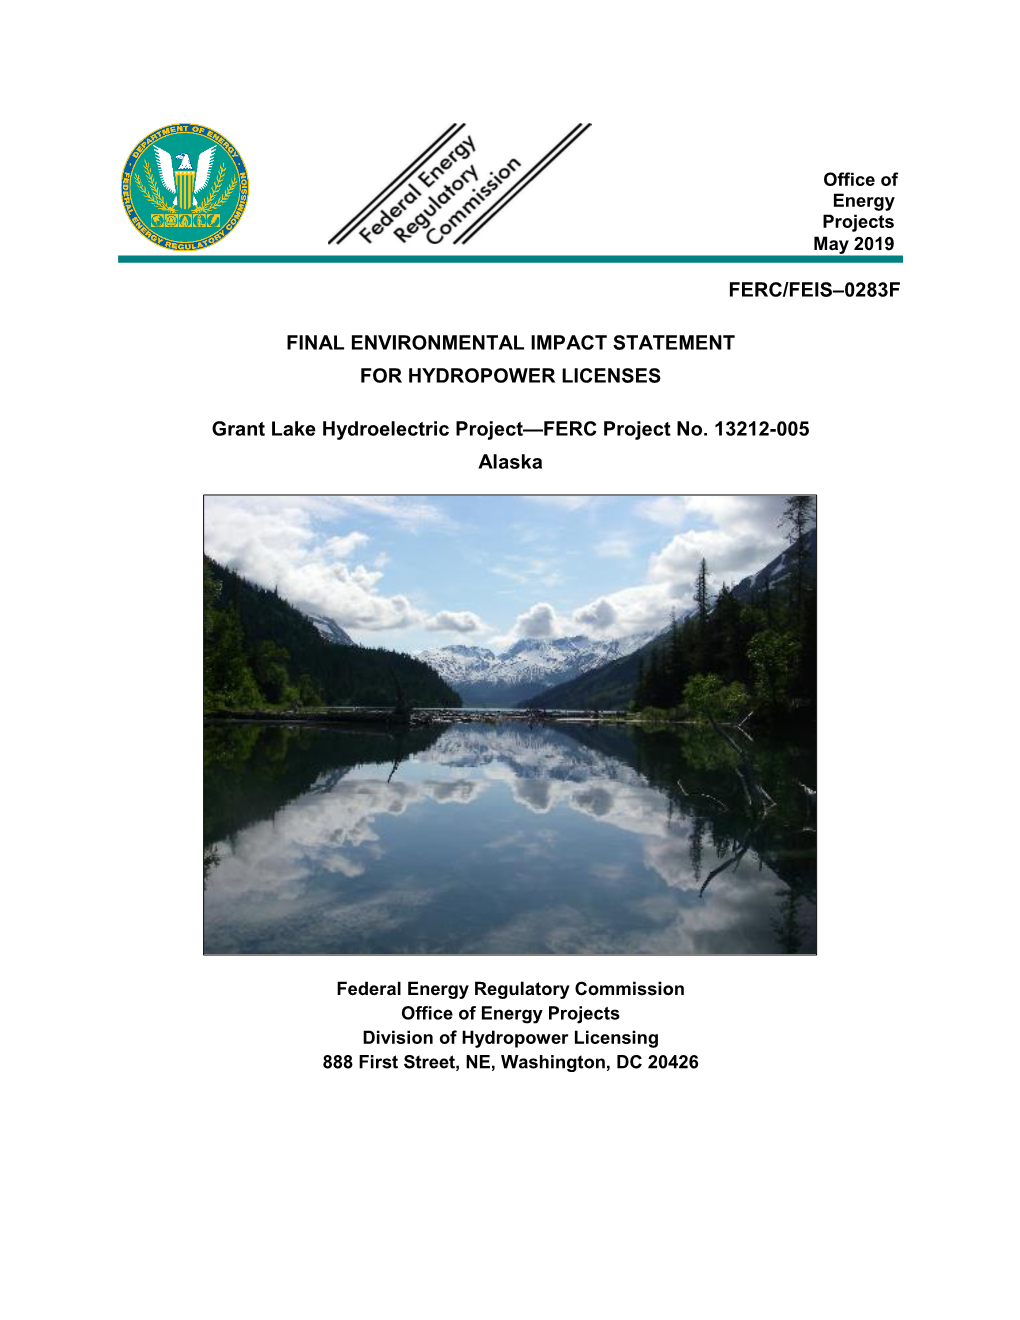 Grant Lake Hydroelectric Project—FERC Project No. 13212-005 Alaska